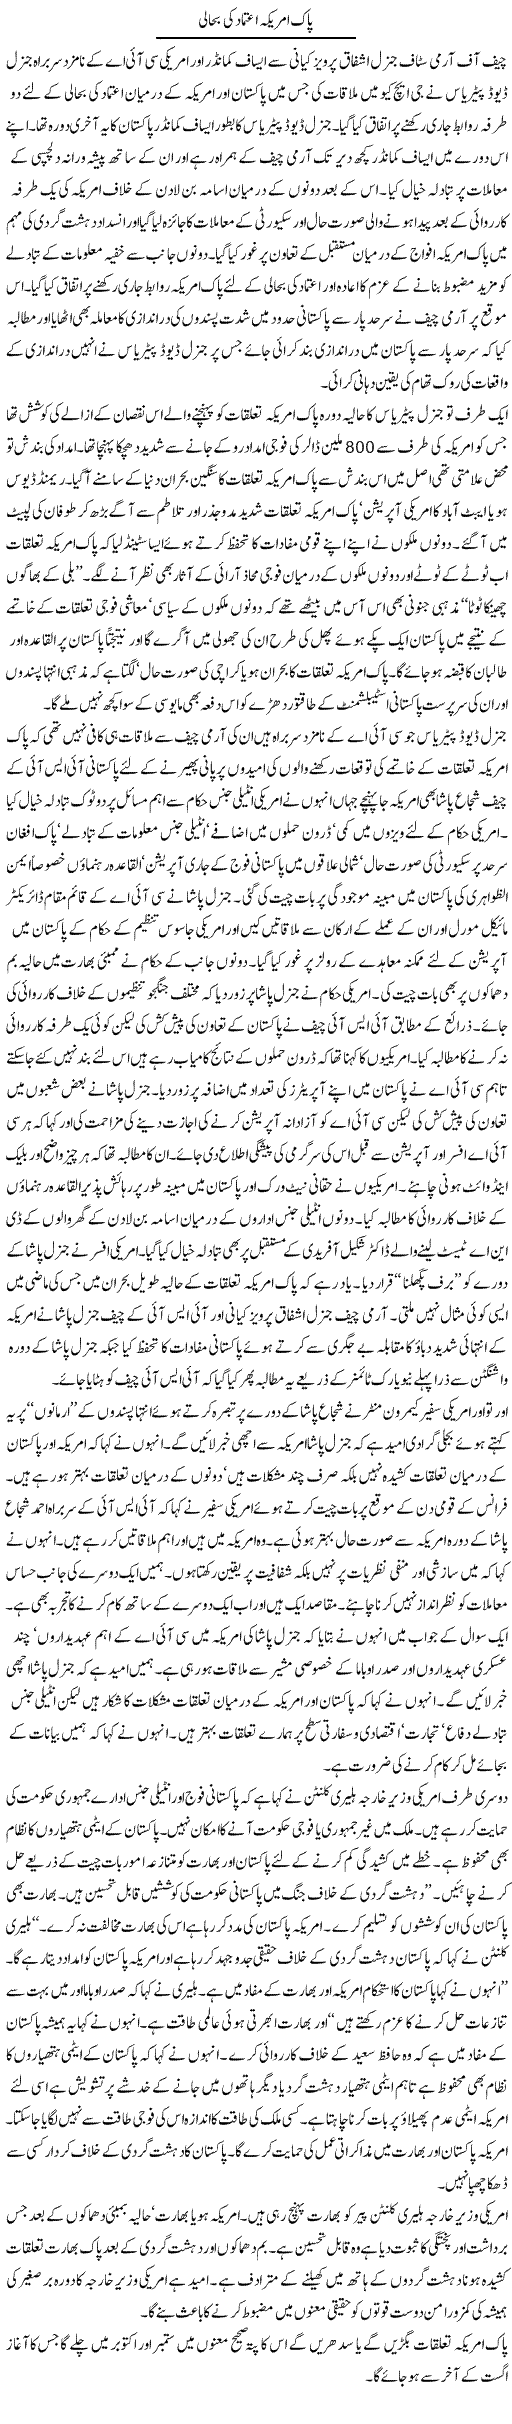 Pakistan America Express Column Zamarud Naqvi  18 July 2011